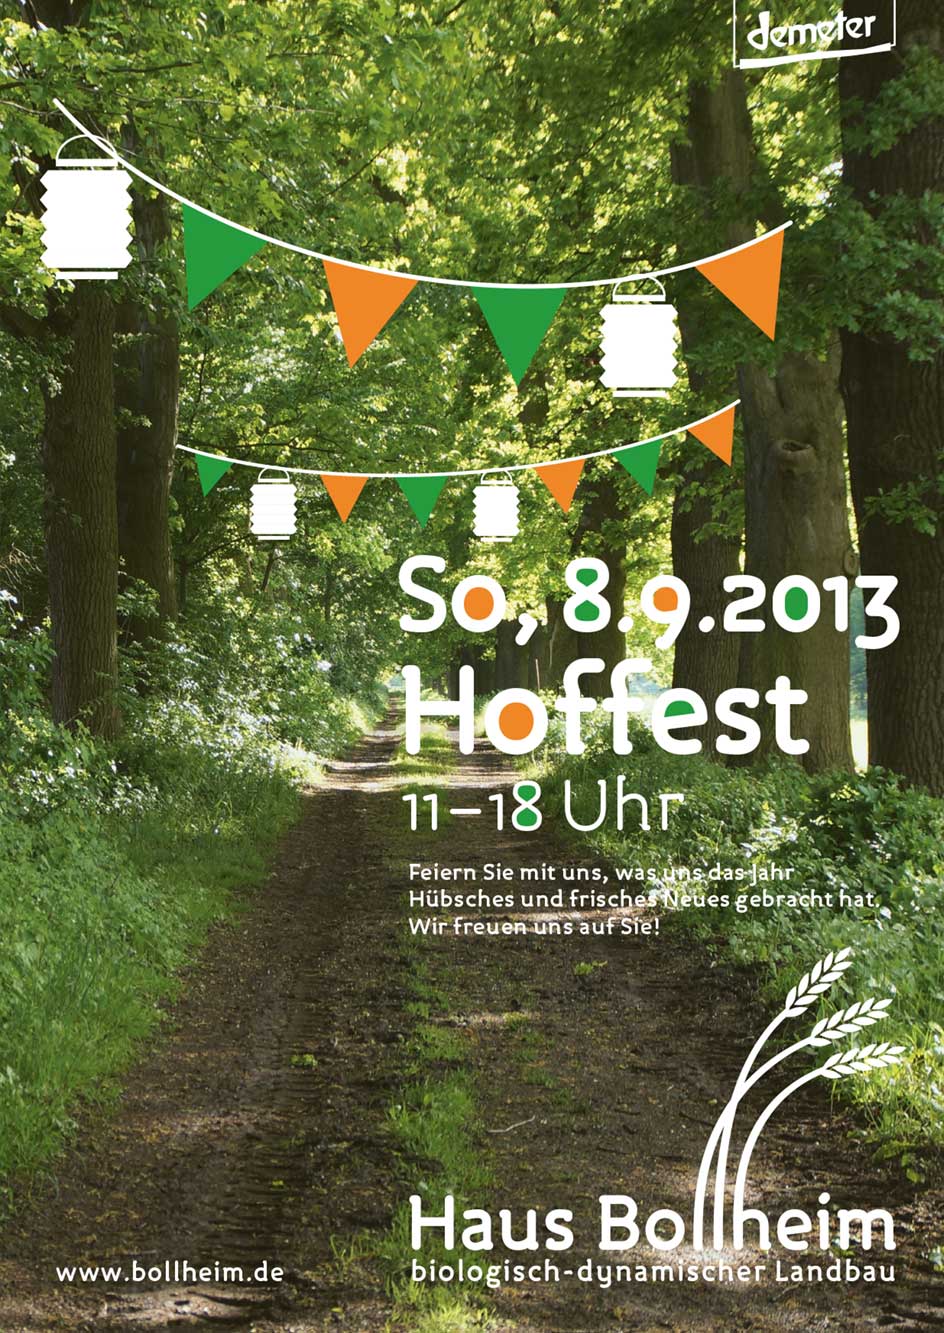 Kommunikationsdesign Haus Bollheim - Plakat Hoffest 2013